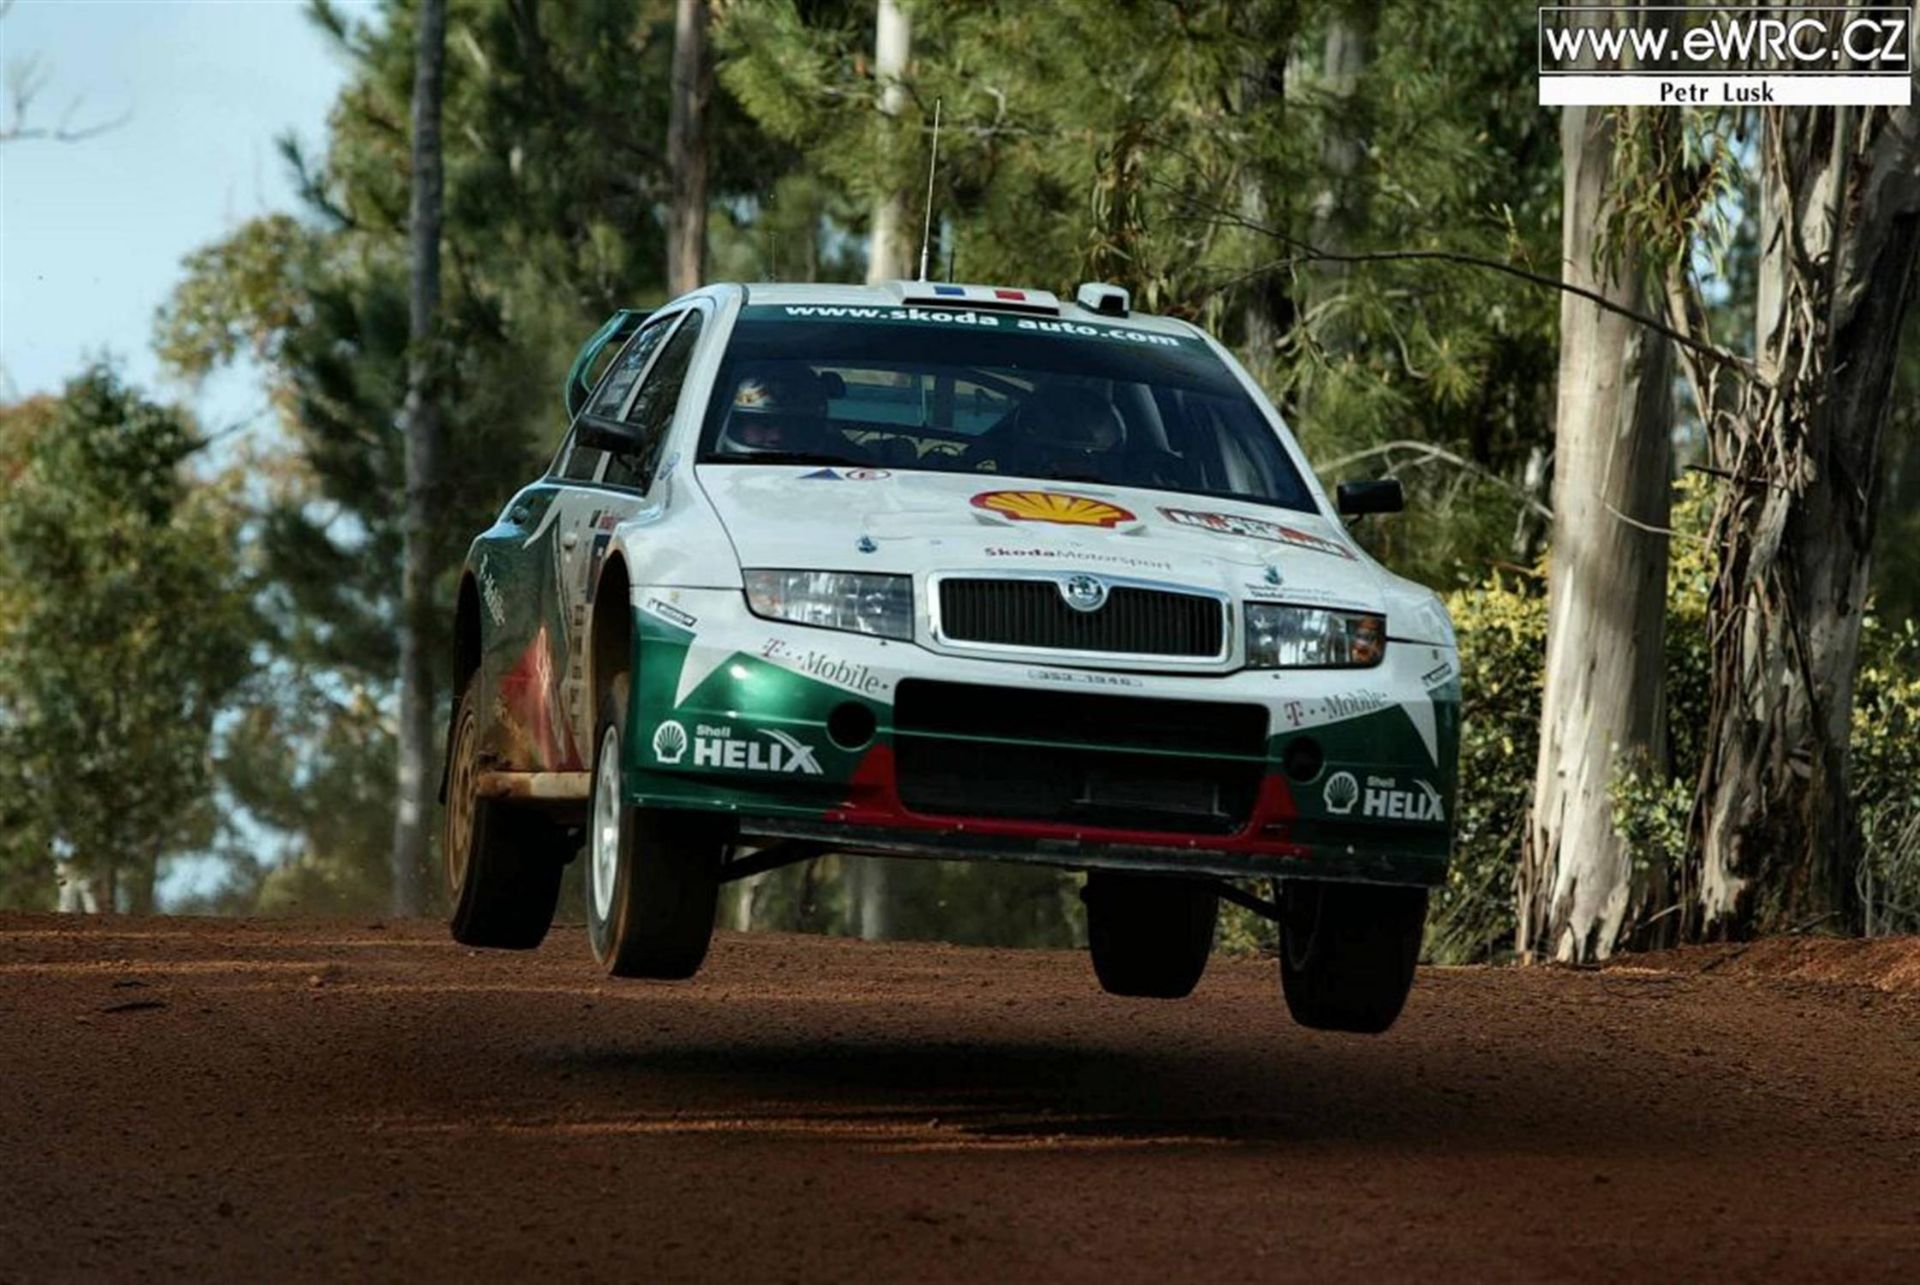 2003 Škoda Fabia WRC - Image 10 of 10